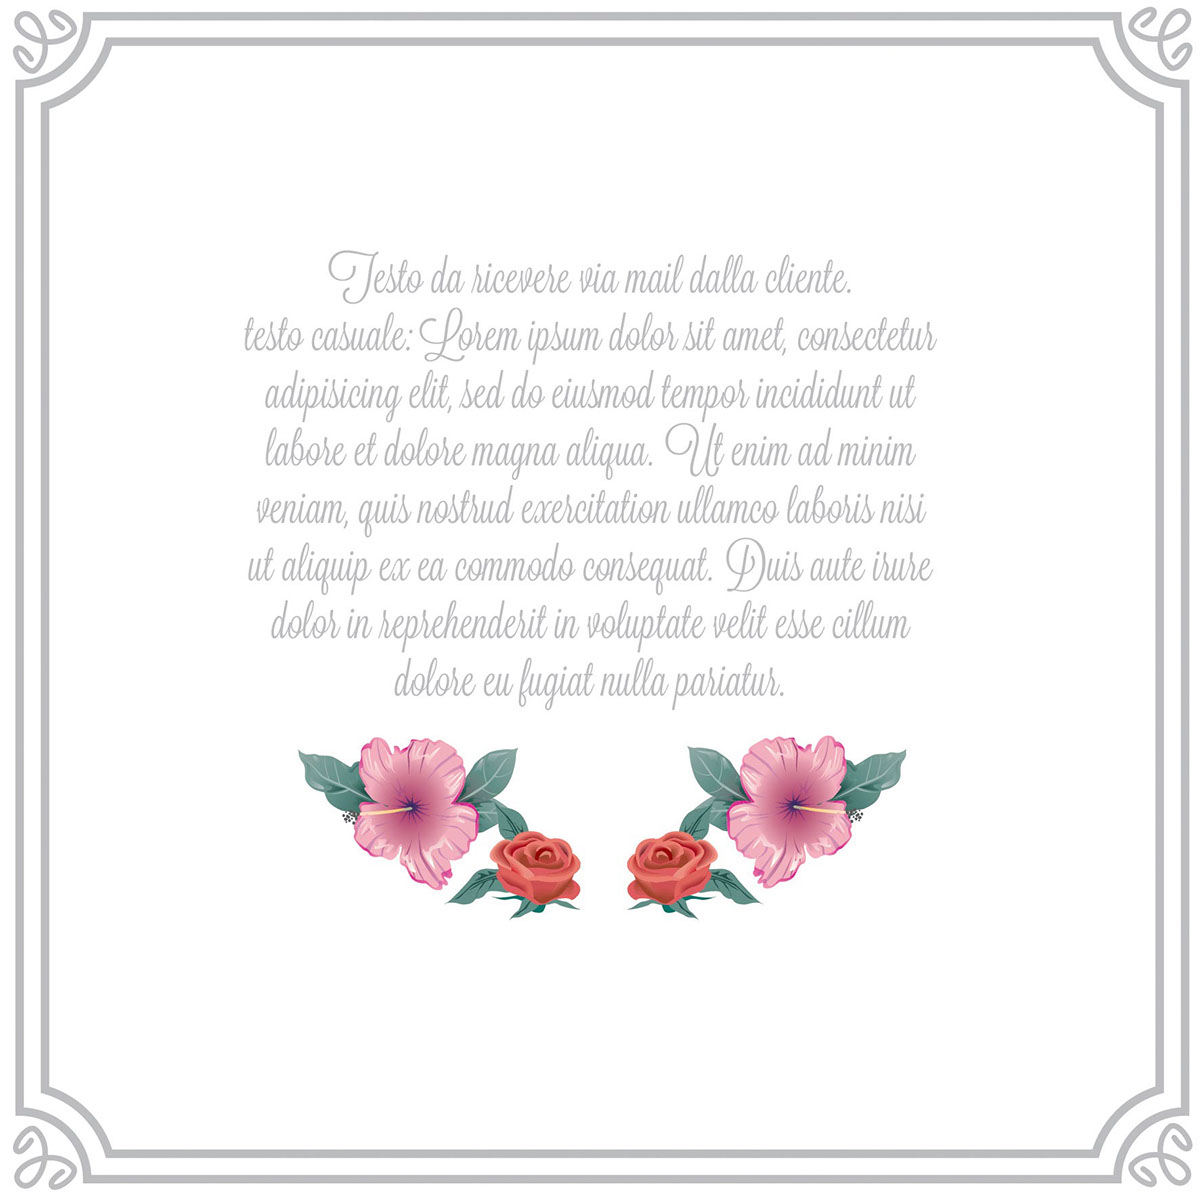 wedding Invitation letter 15x15 color San daniele uudine Italy Giuseppe ambrosio pink rose grey flower